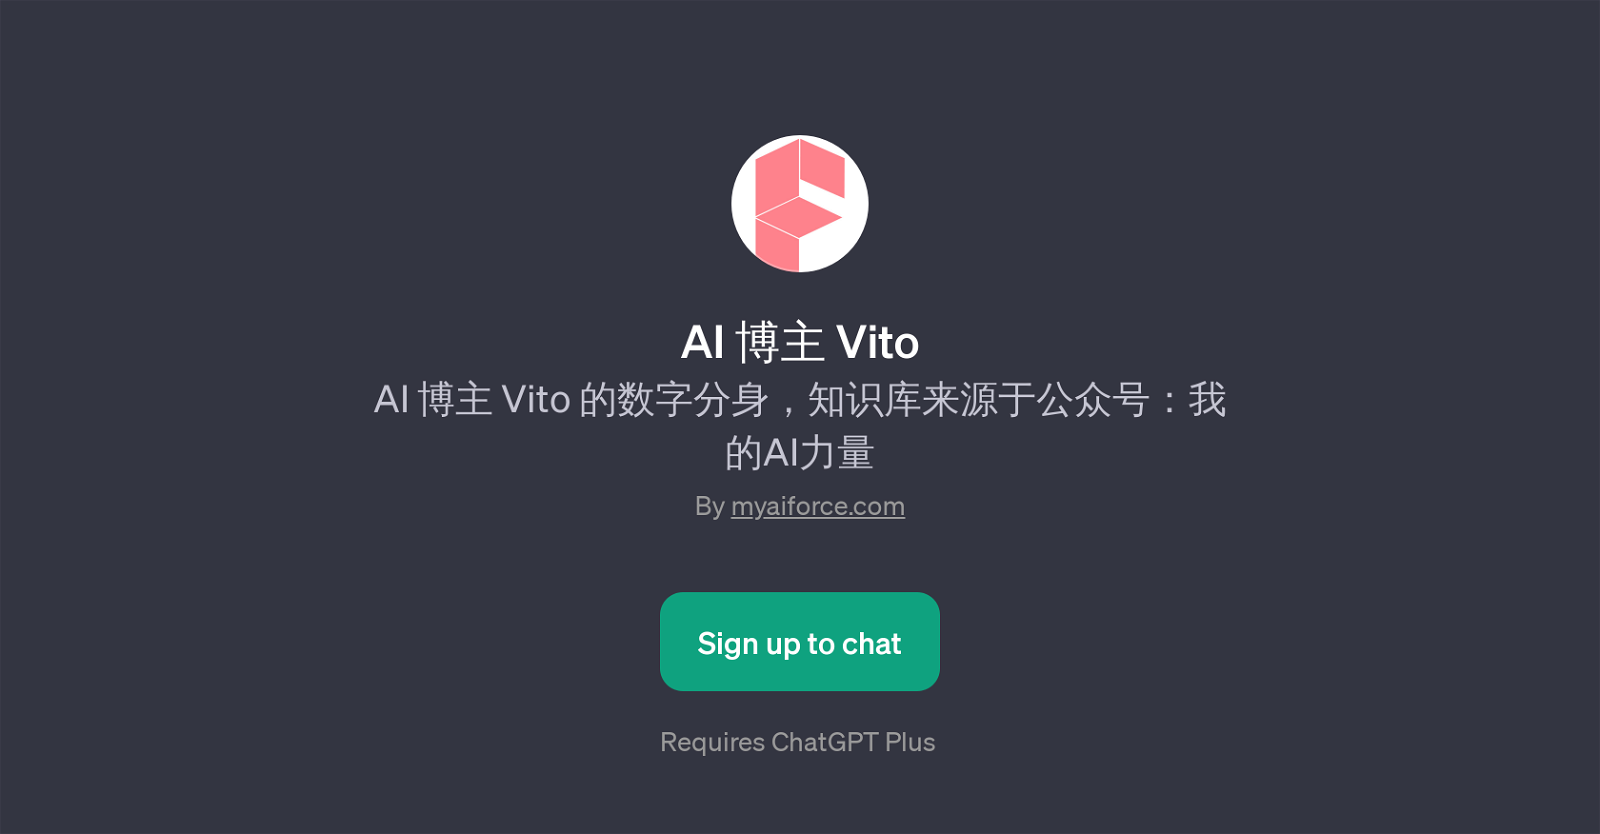 AI  Vito website